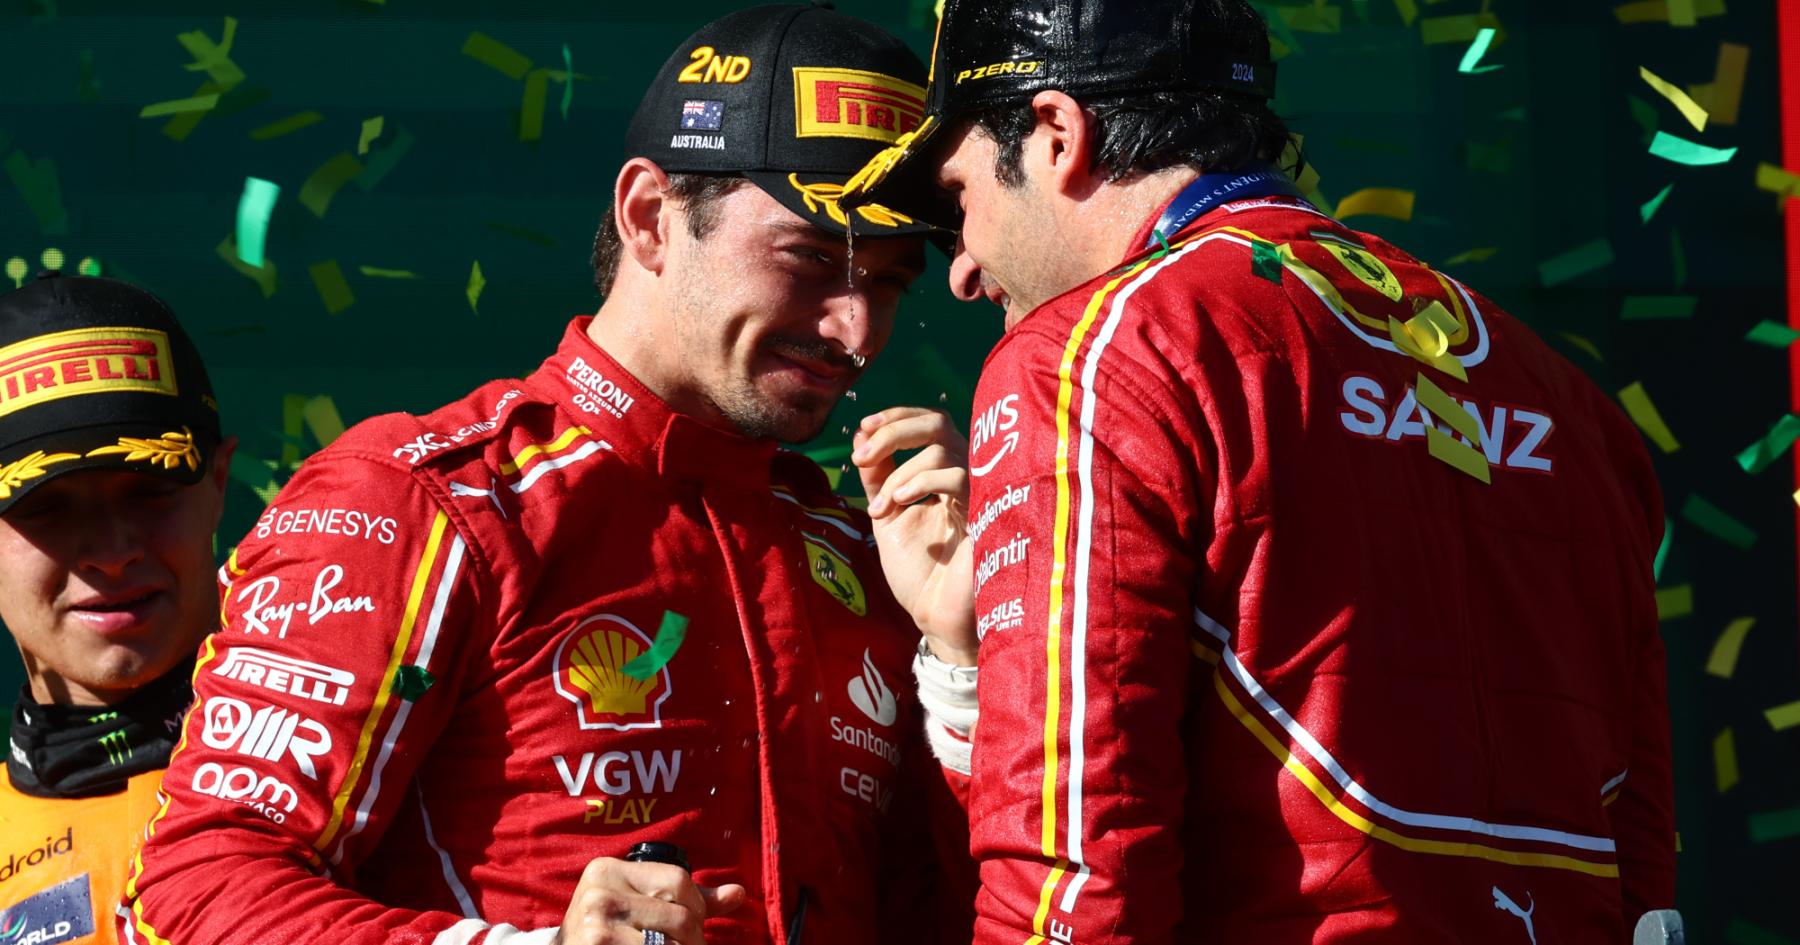 Ferrari's Daring Pursuit: Andretti's Show of Confidence Sparking Championship Aspirations